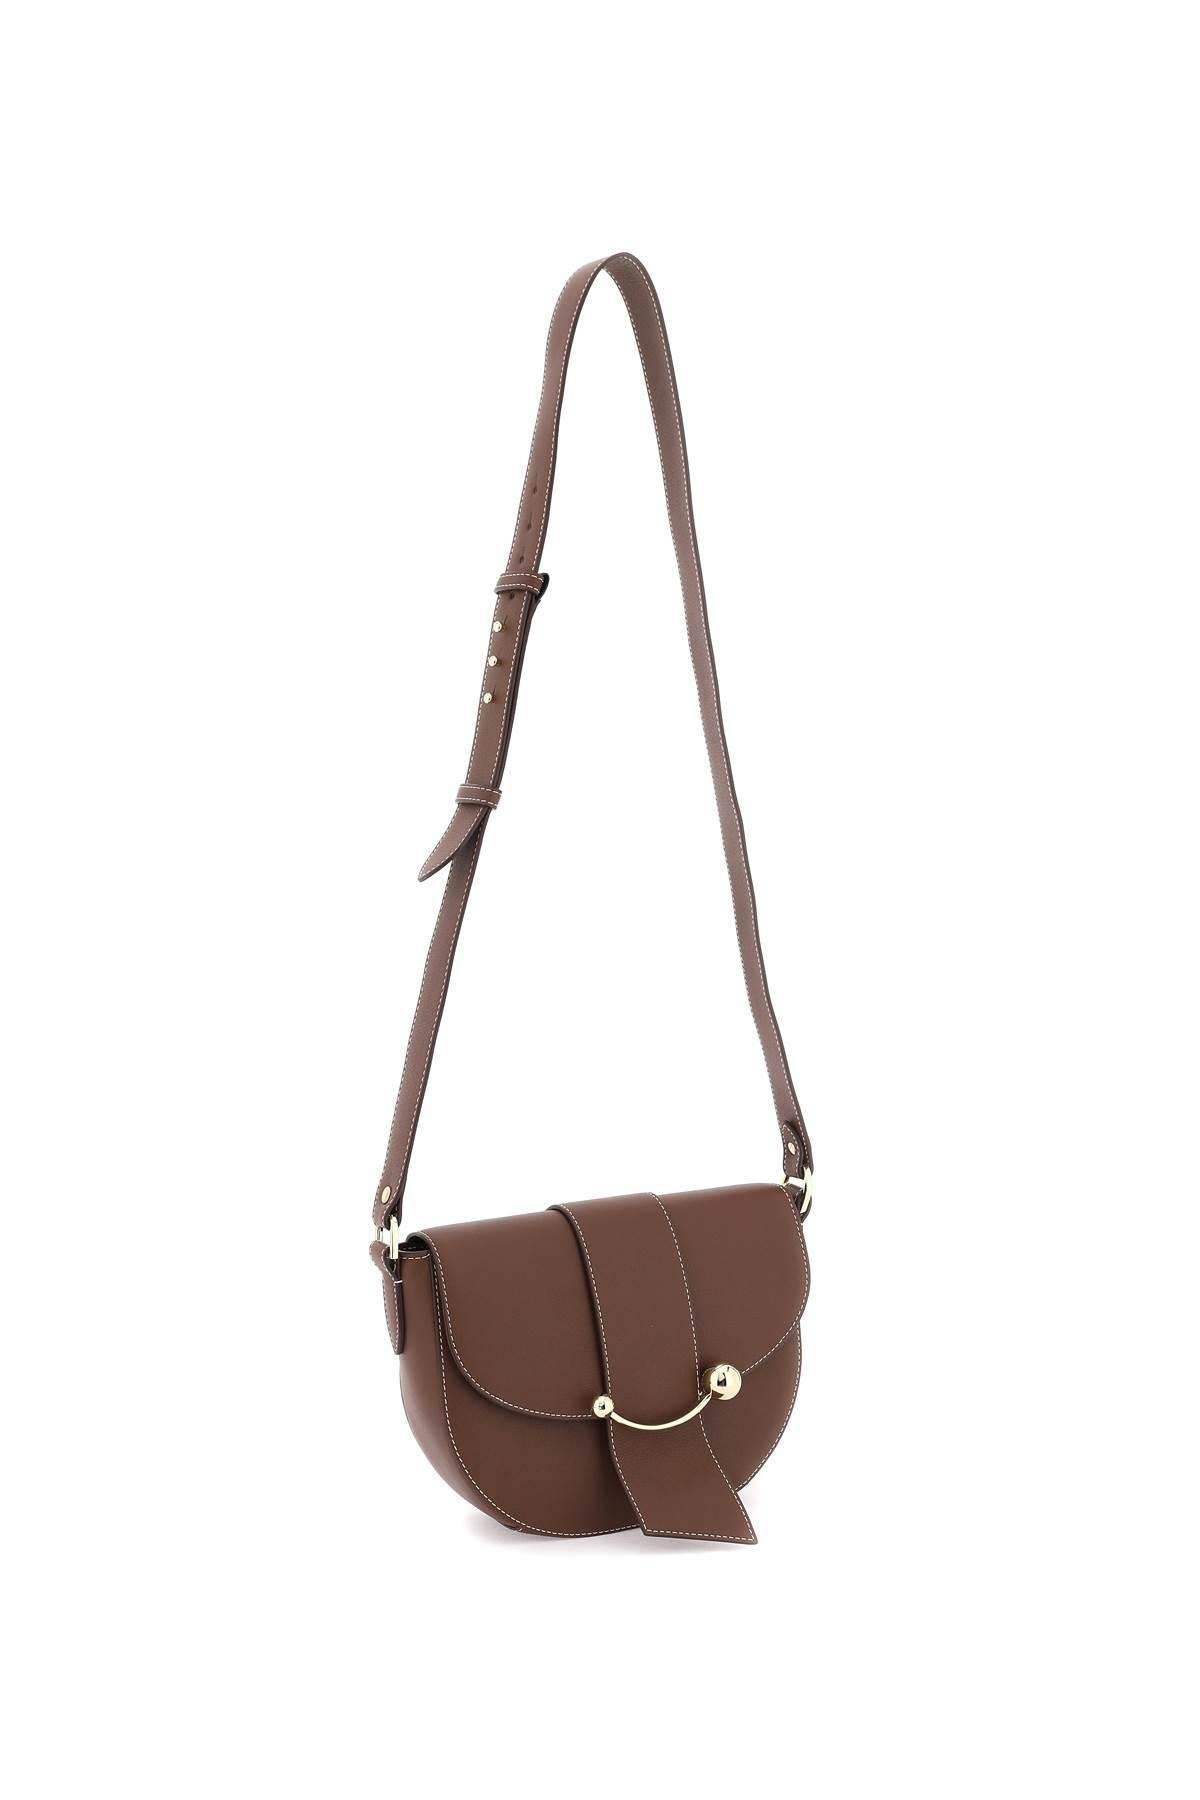 STRATHBERRY Crescent Flap Leather Shoulder Bag for Women